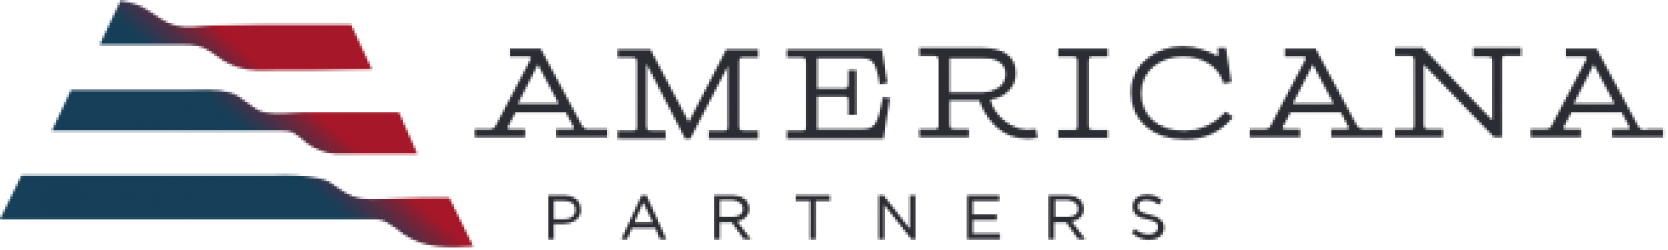 Americana Partners logo